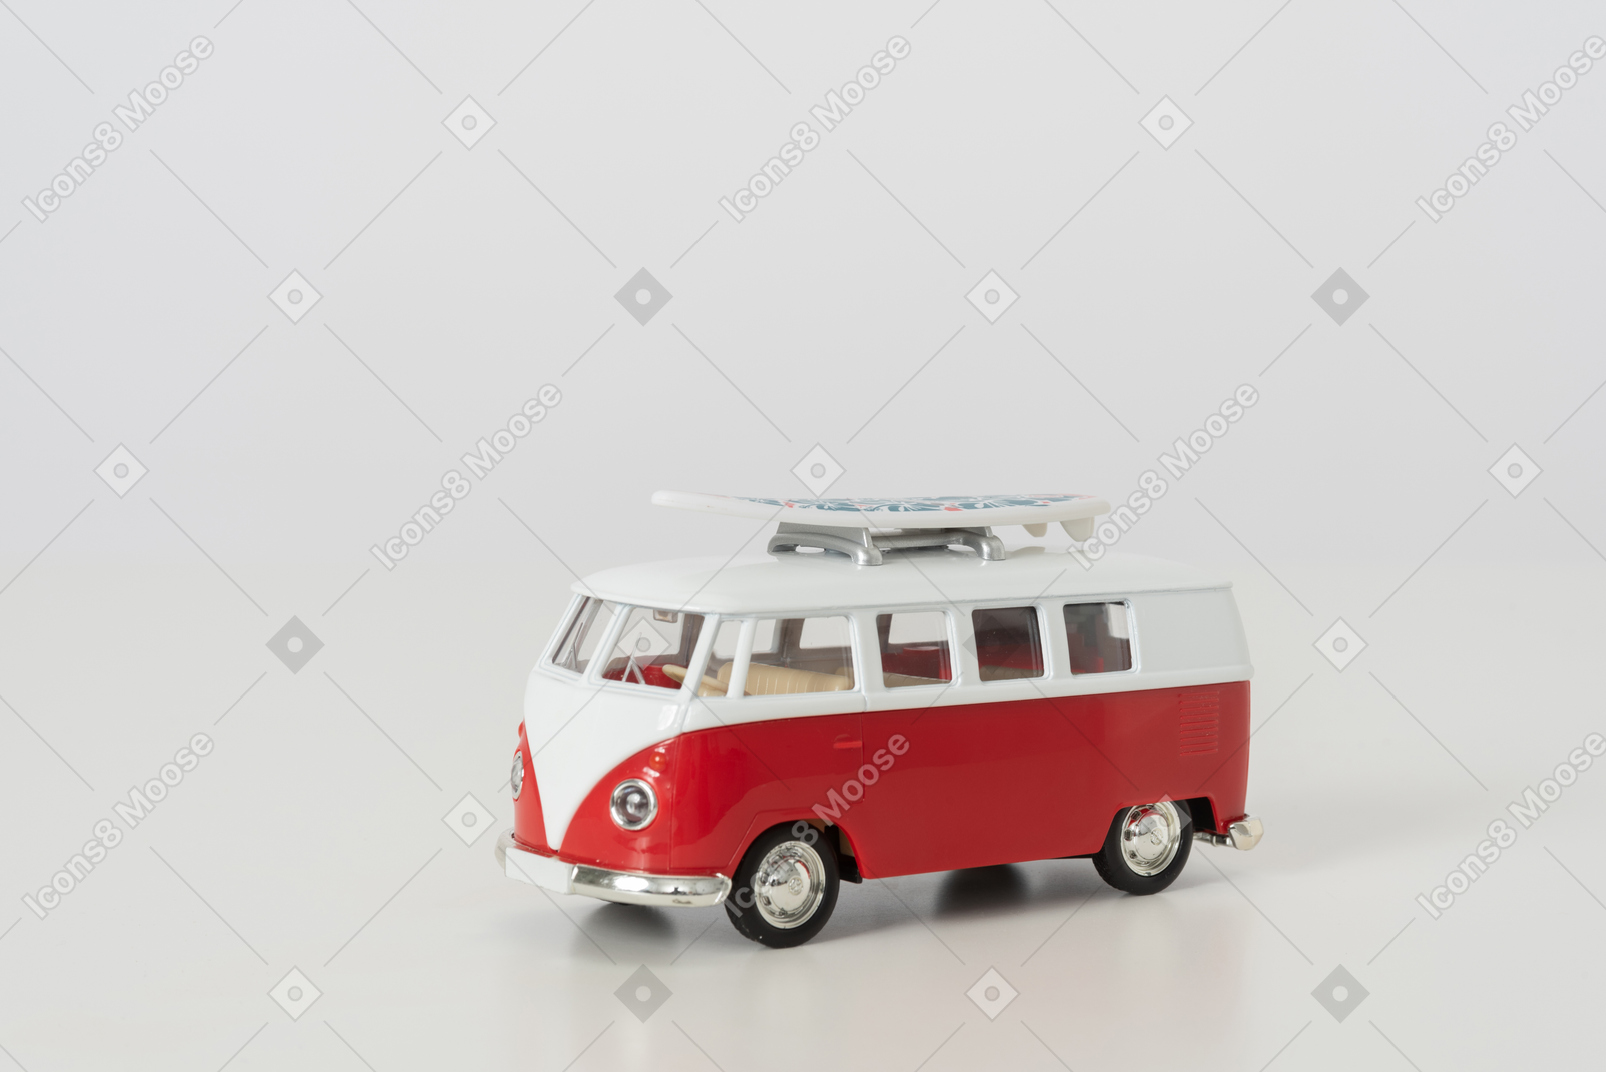 Hippie toy autobus photographed sideways on grey background